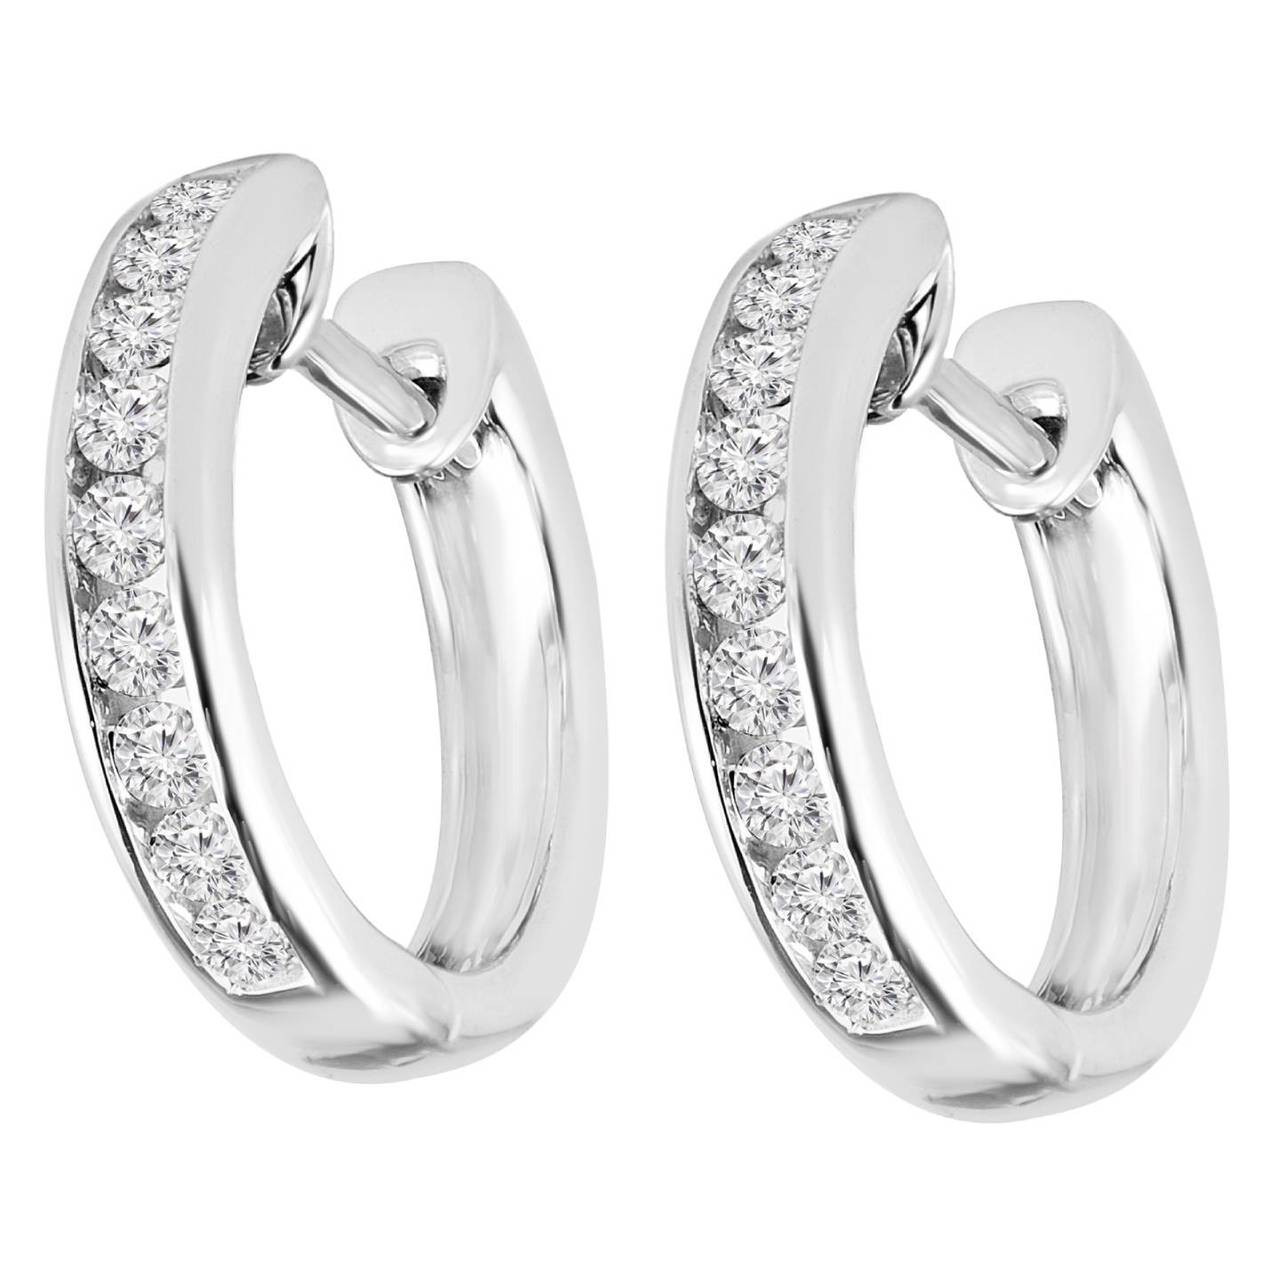 Buy New Design One Gram Gold Ring Type Bali Earrings Buy Online in India